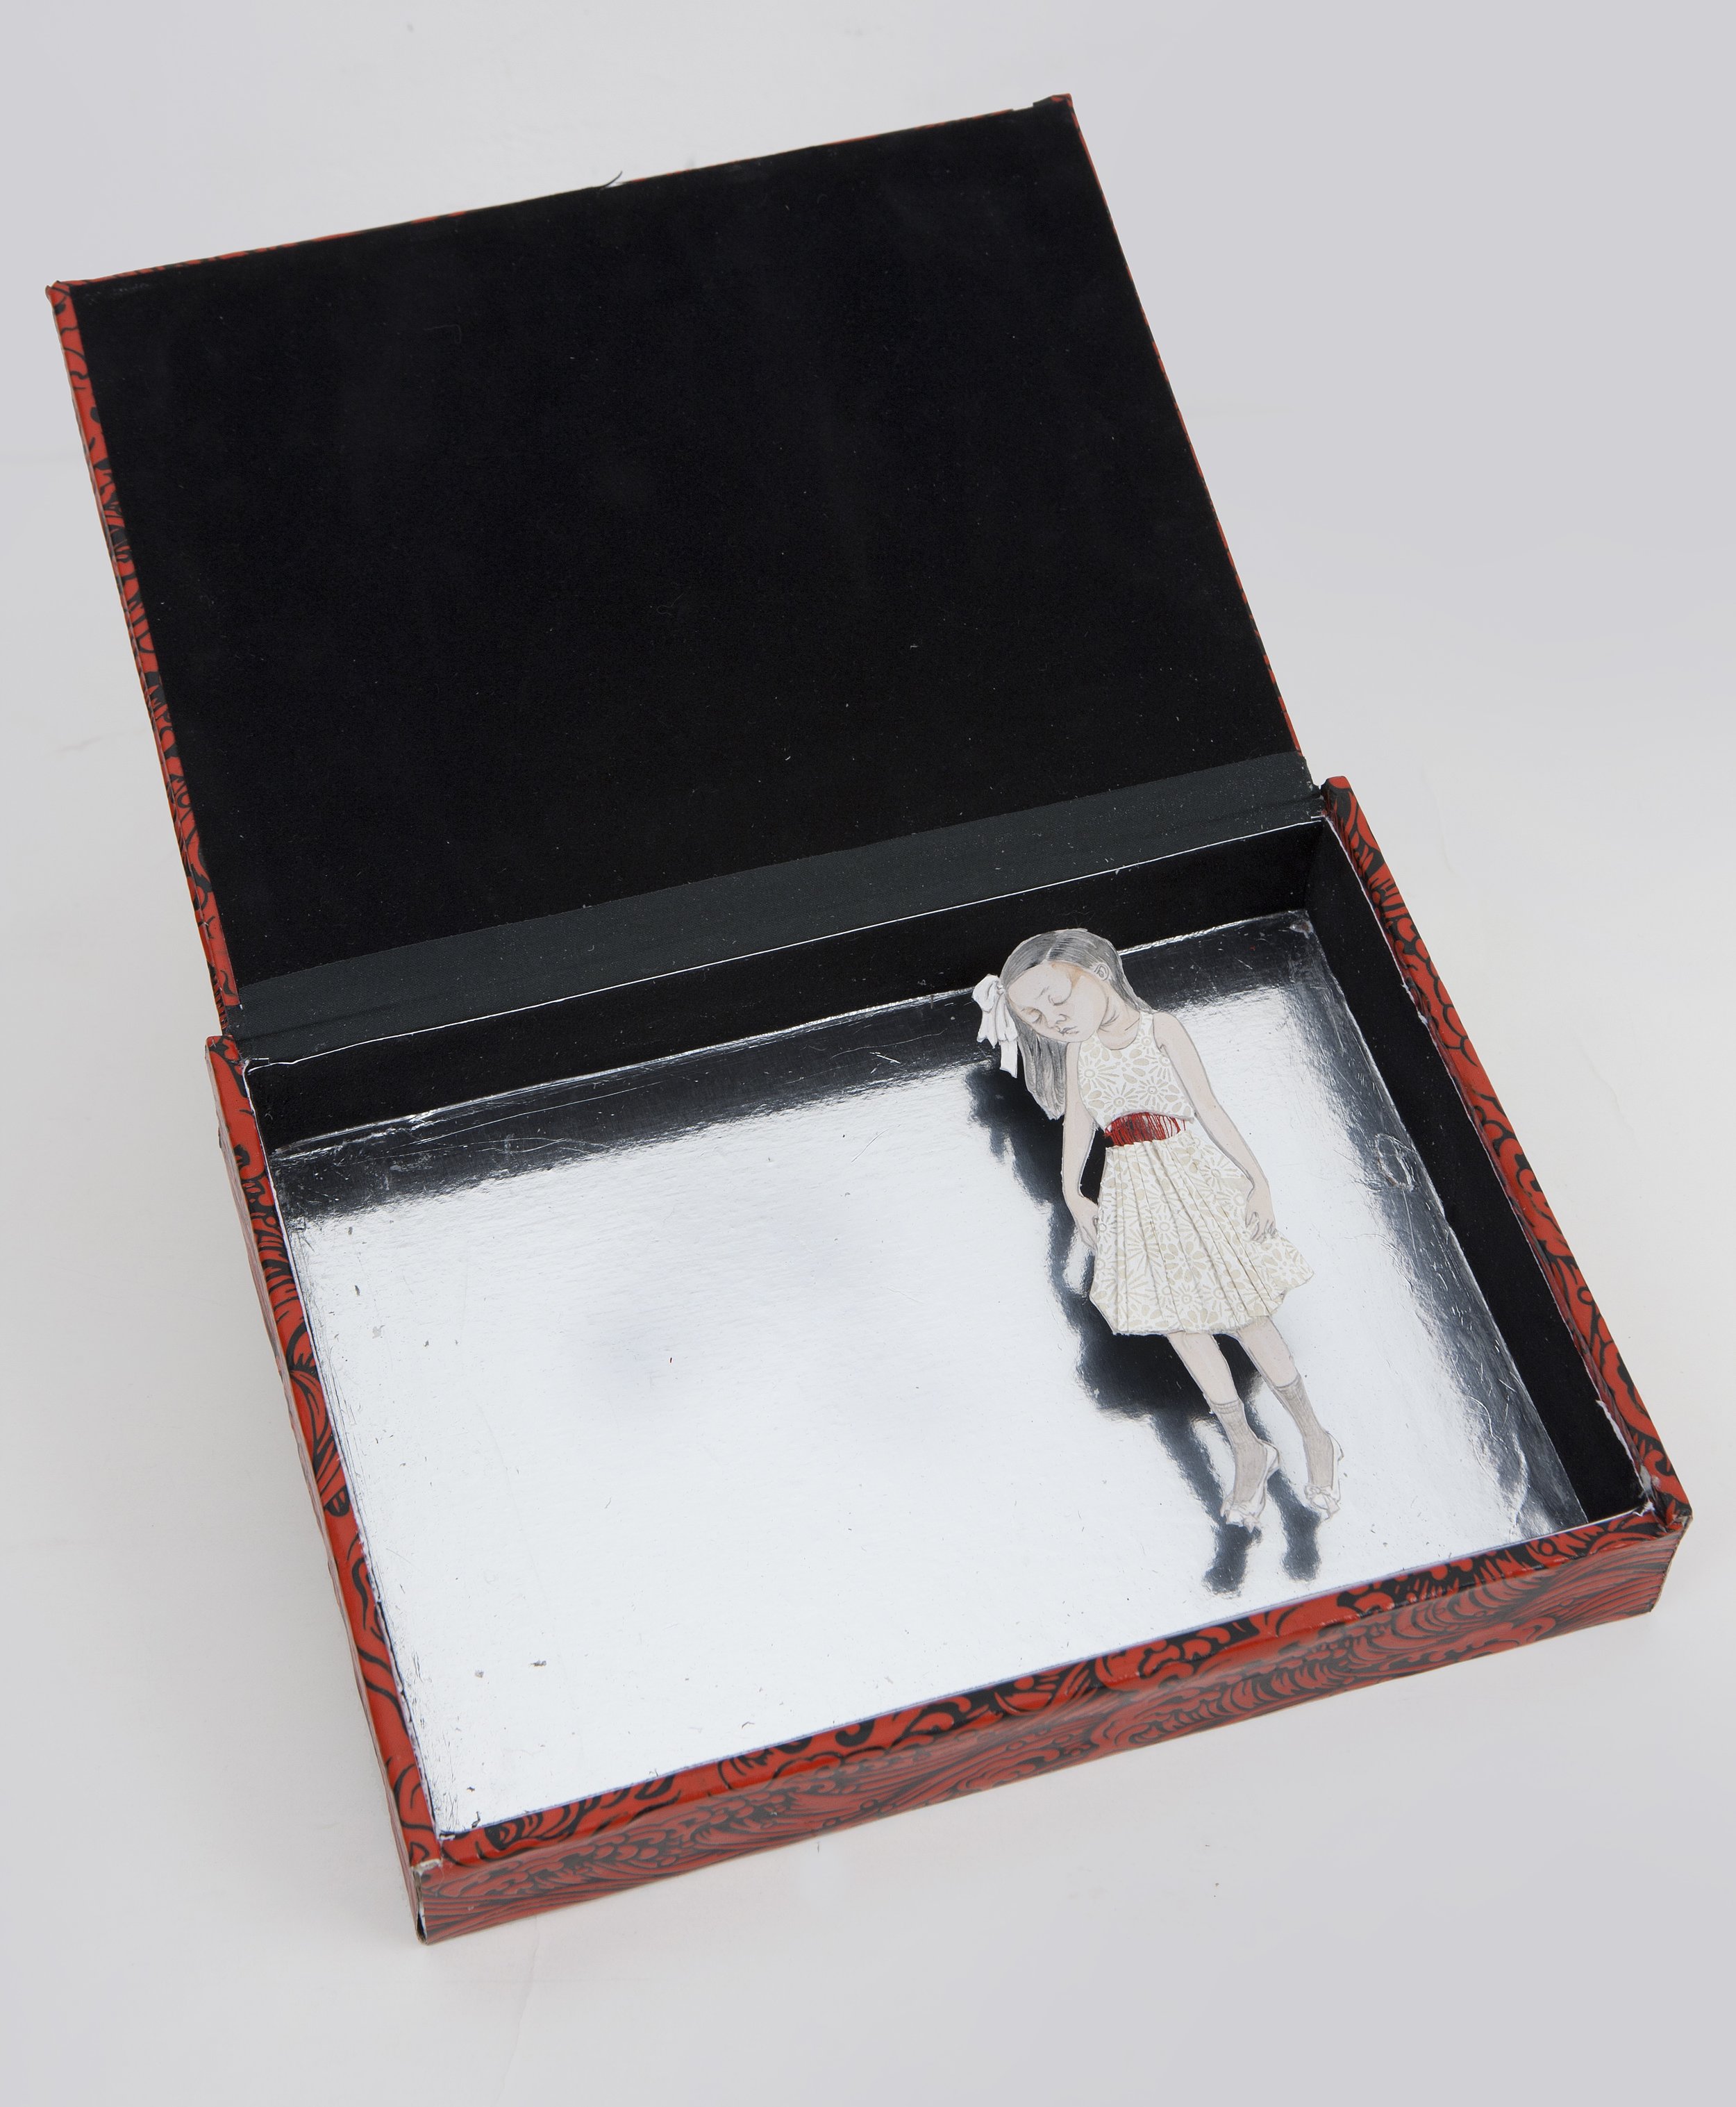   Untitled (Box I) , 2010 Graphite, watercolor, ink, paper, thread, glue and found box  